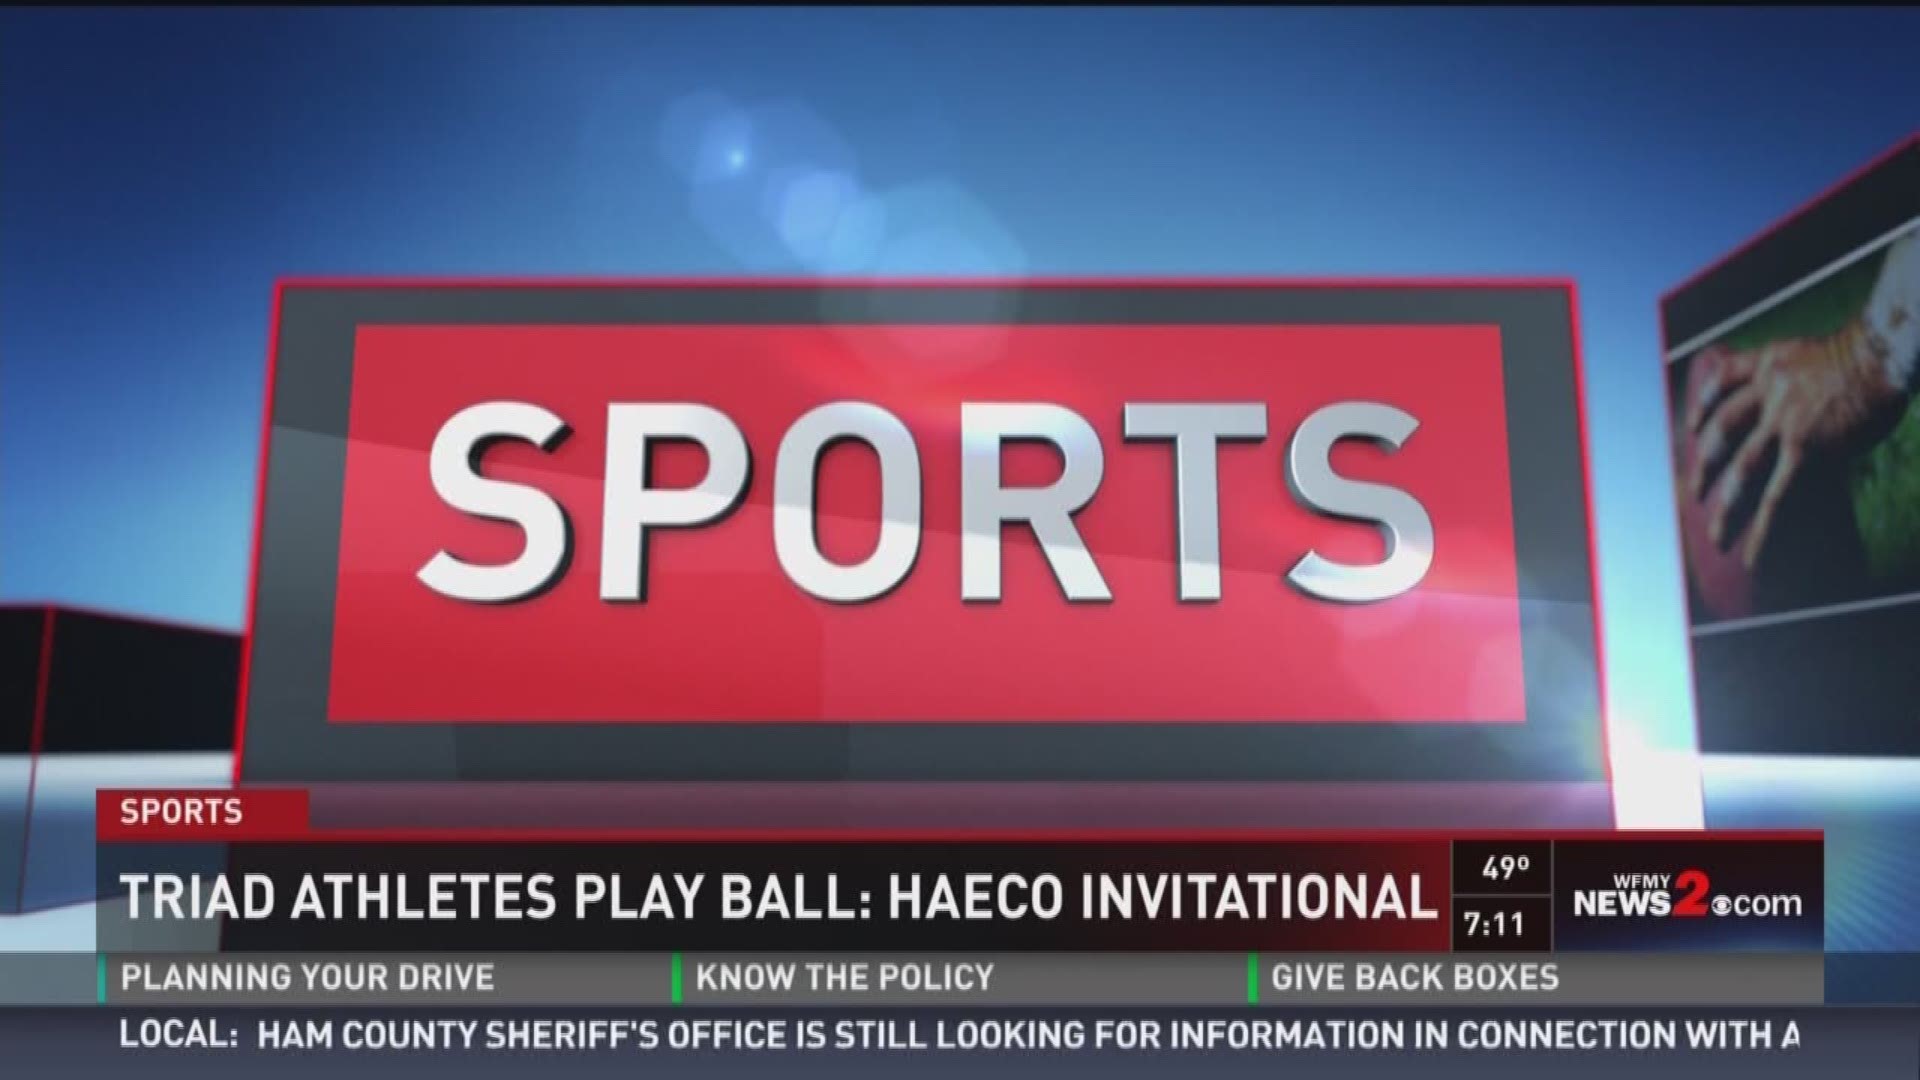 Triad Athletes Play Ball: HAECO Invitational